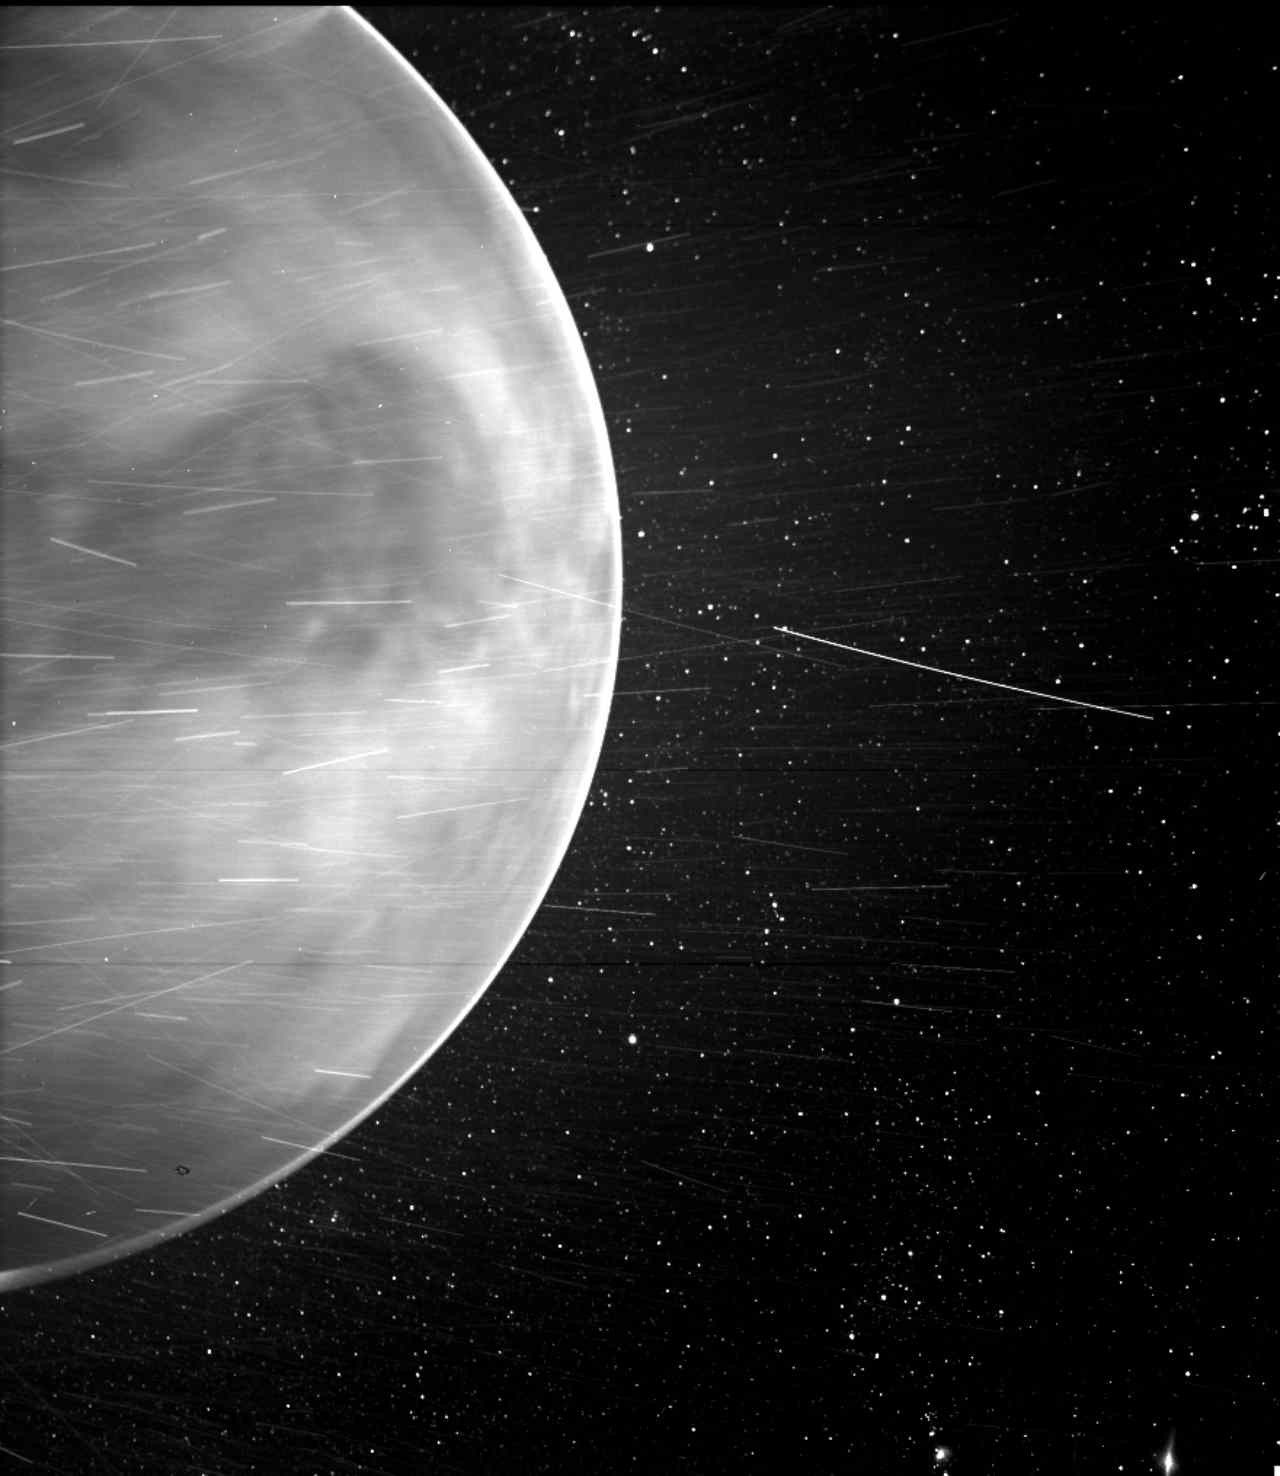  Rare glimpse of Venus in a new light captured by WISPR camera on NASAs Parker probe